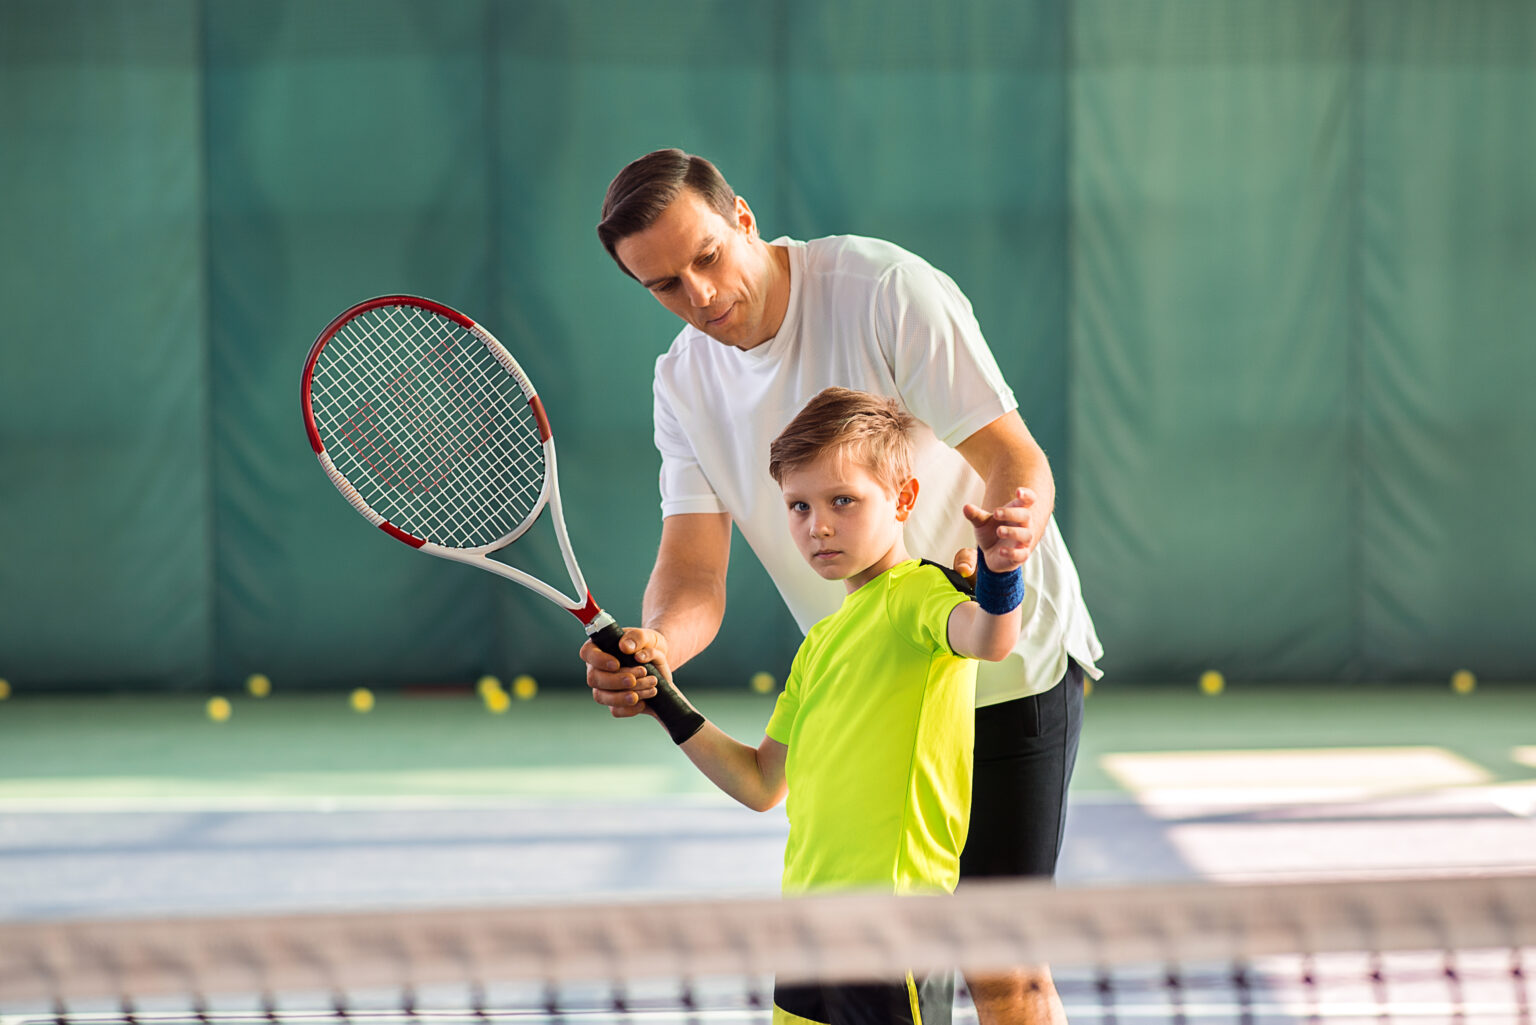 You can play tennis your. Теннис дети. Ребенок теннисист. Дети играющие в теннис. Ребенок с теннисной ракеткой.